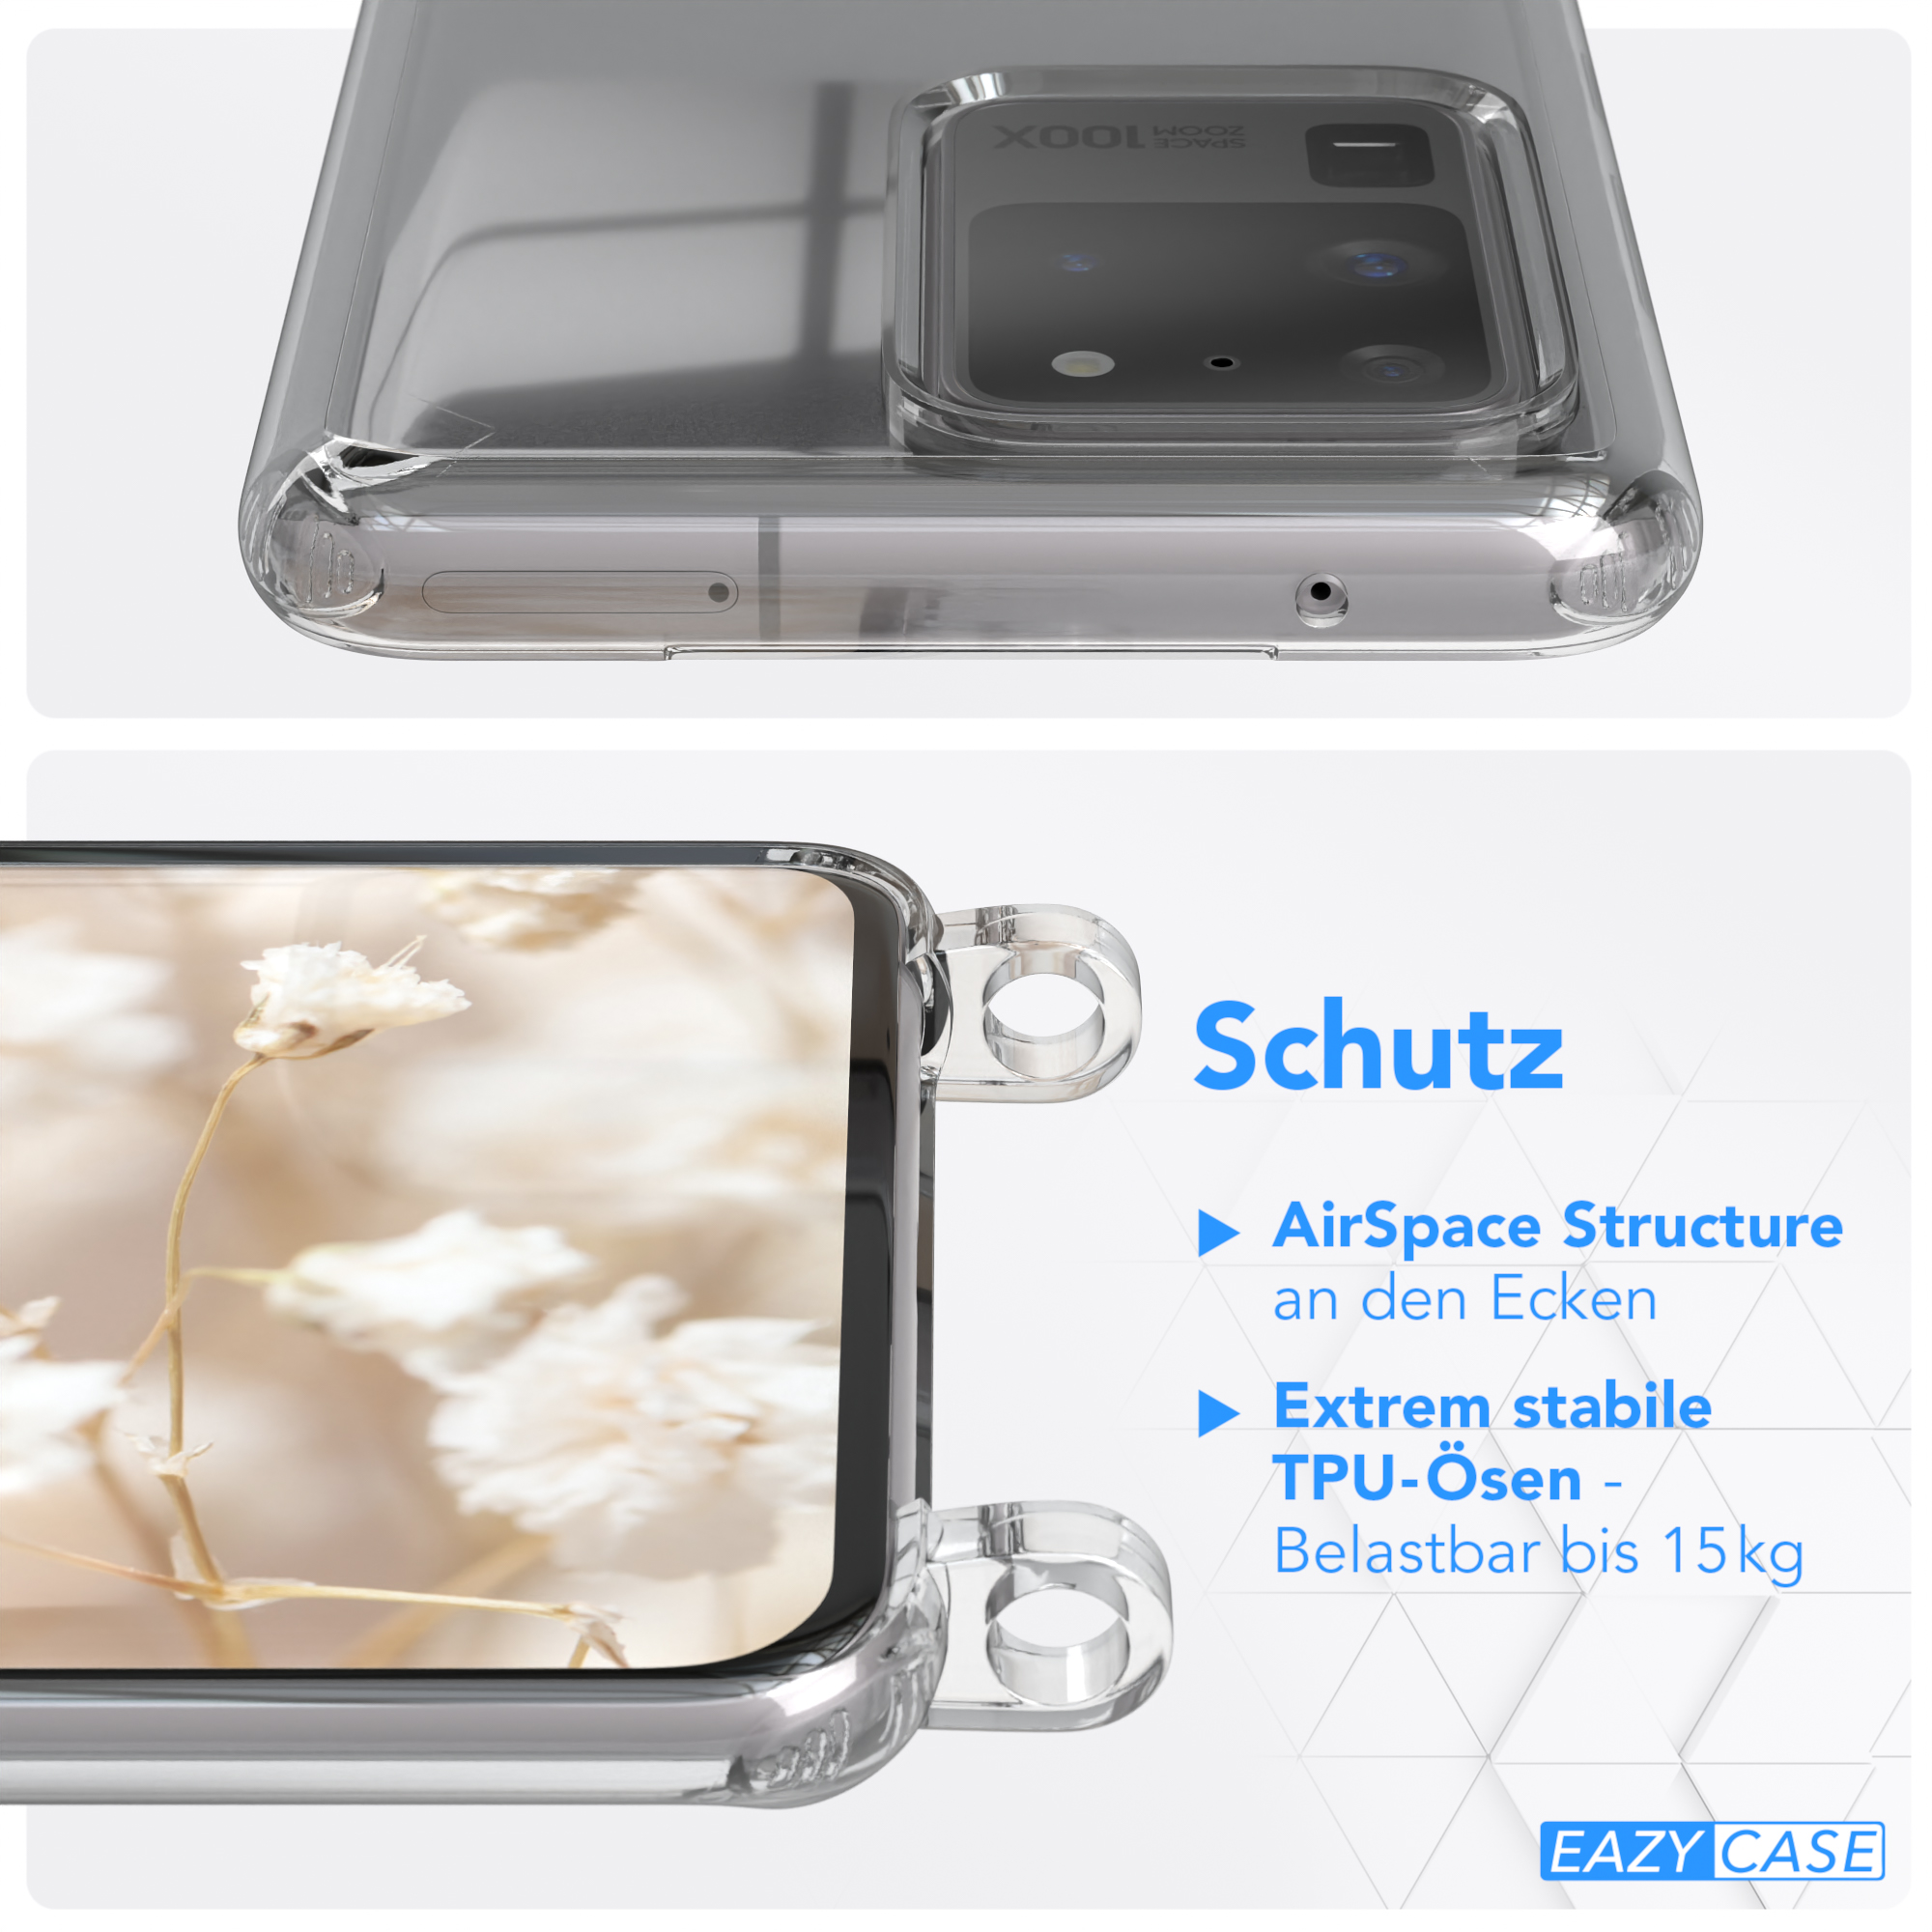 Galaxy Transparente / Boho Mix EAZY mit Ultra Umhängetasche, 5G, Samsung, CASE Style, S20 Ultra Handyhülle Kordel S20 Braun